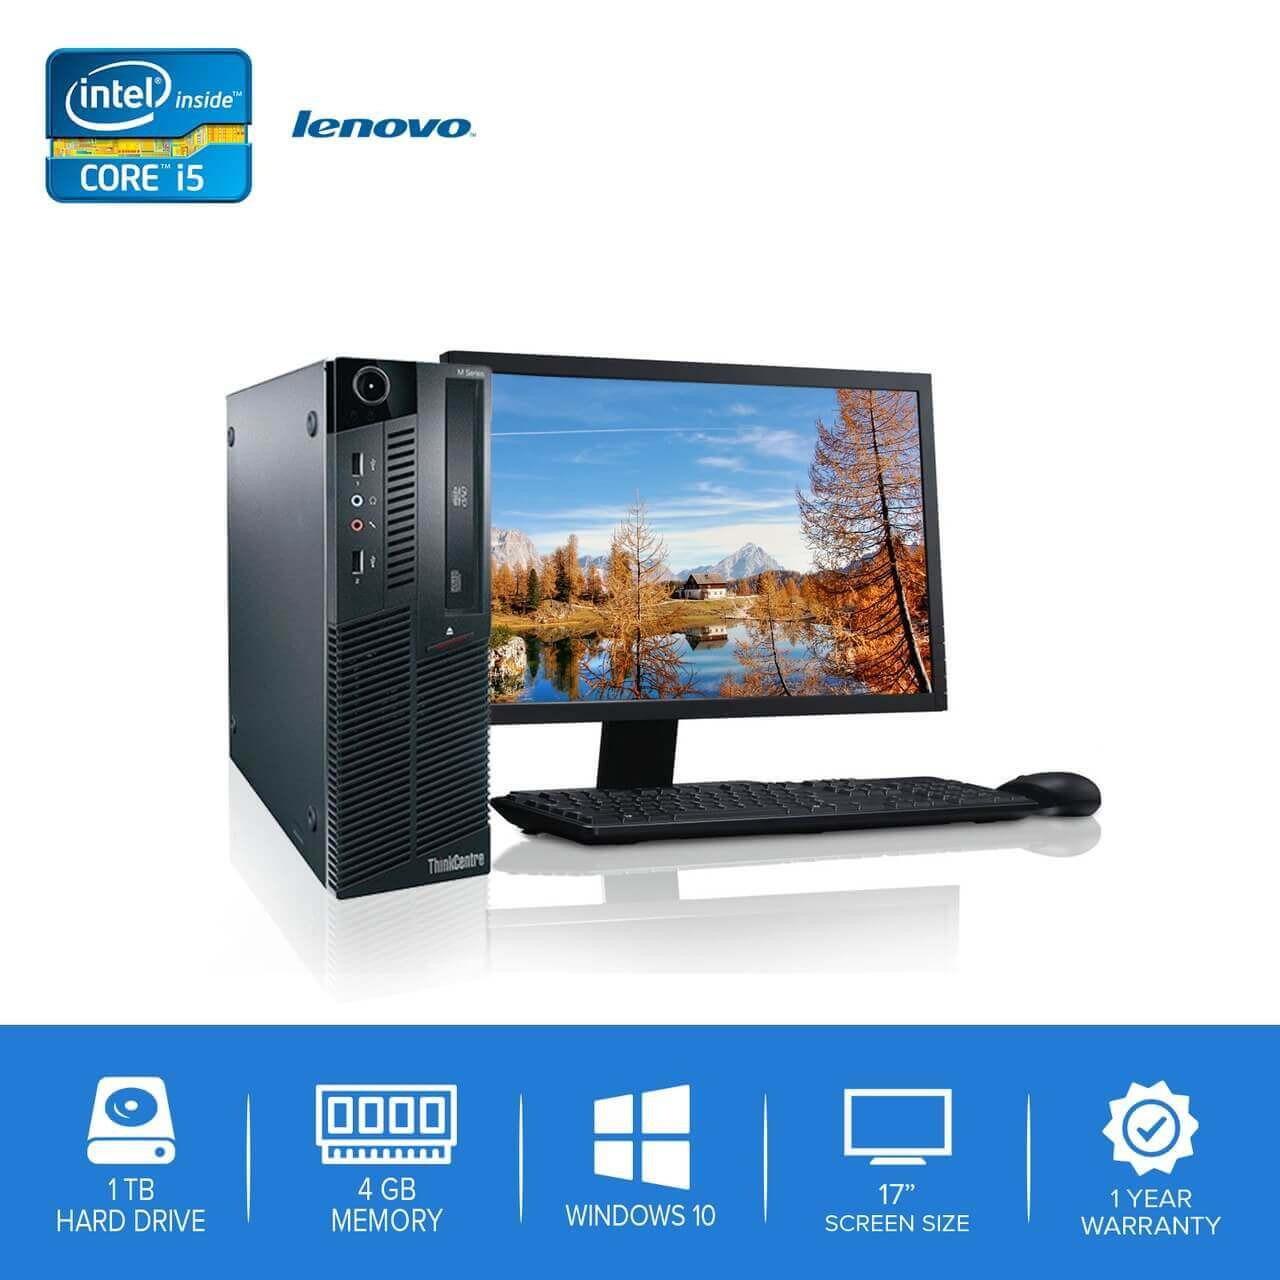 Lenovo-ThinkCentre M90 M91 Desktop Computer PC – Intel Core i5- 4GB Memory  – 1TB Hard Drive - Windows 10 with 17” LCD